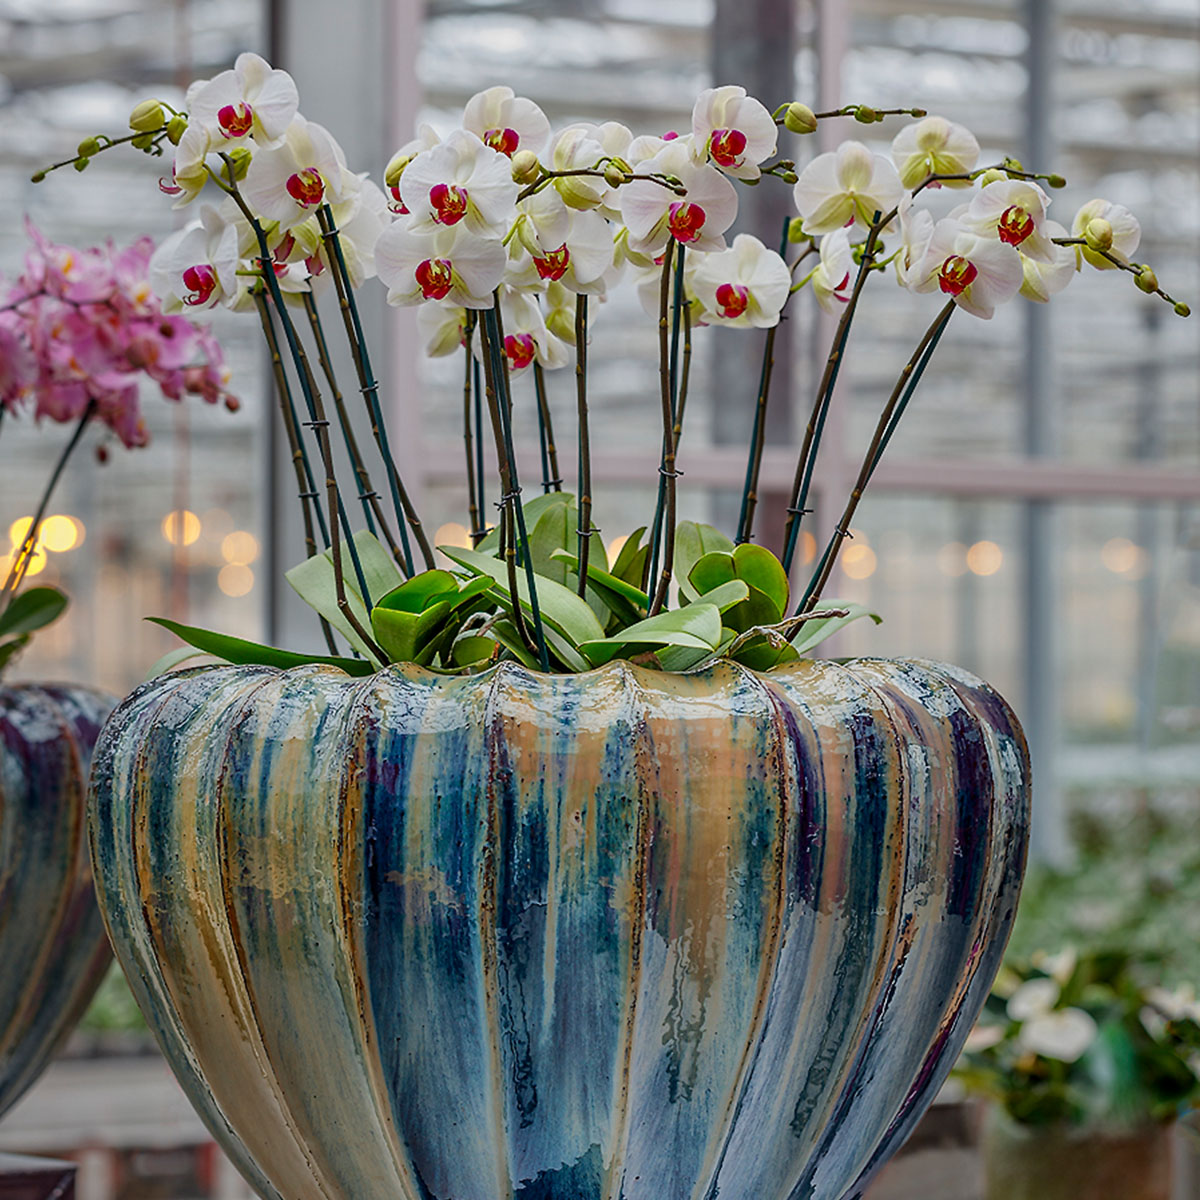 White Phalaenopsis show greenhouse Floricultura on Thursd